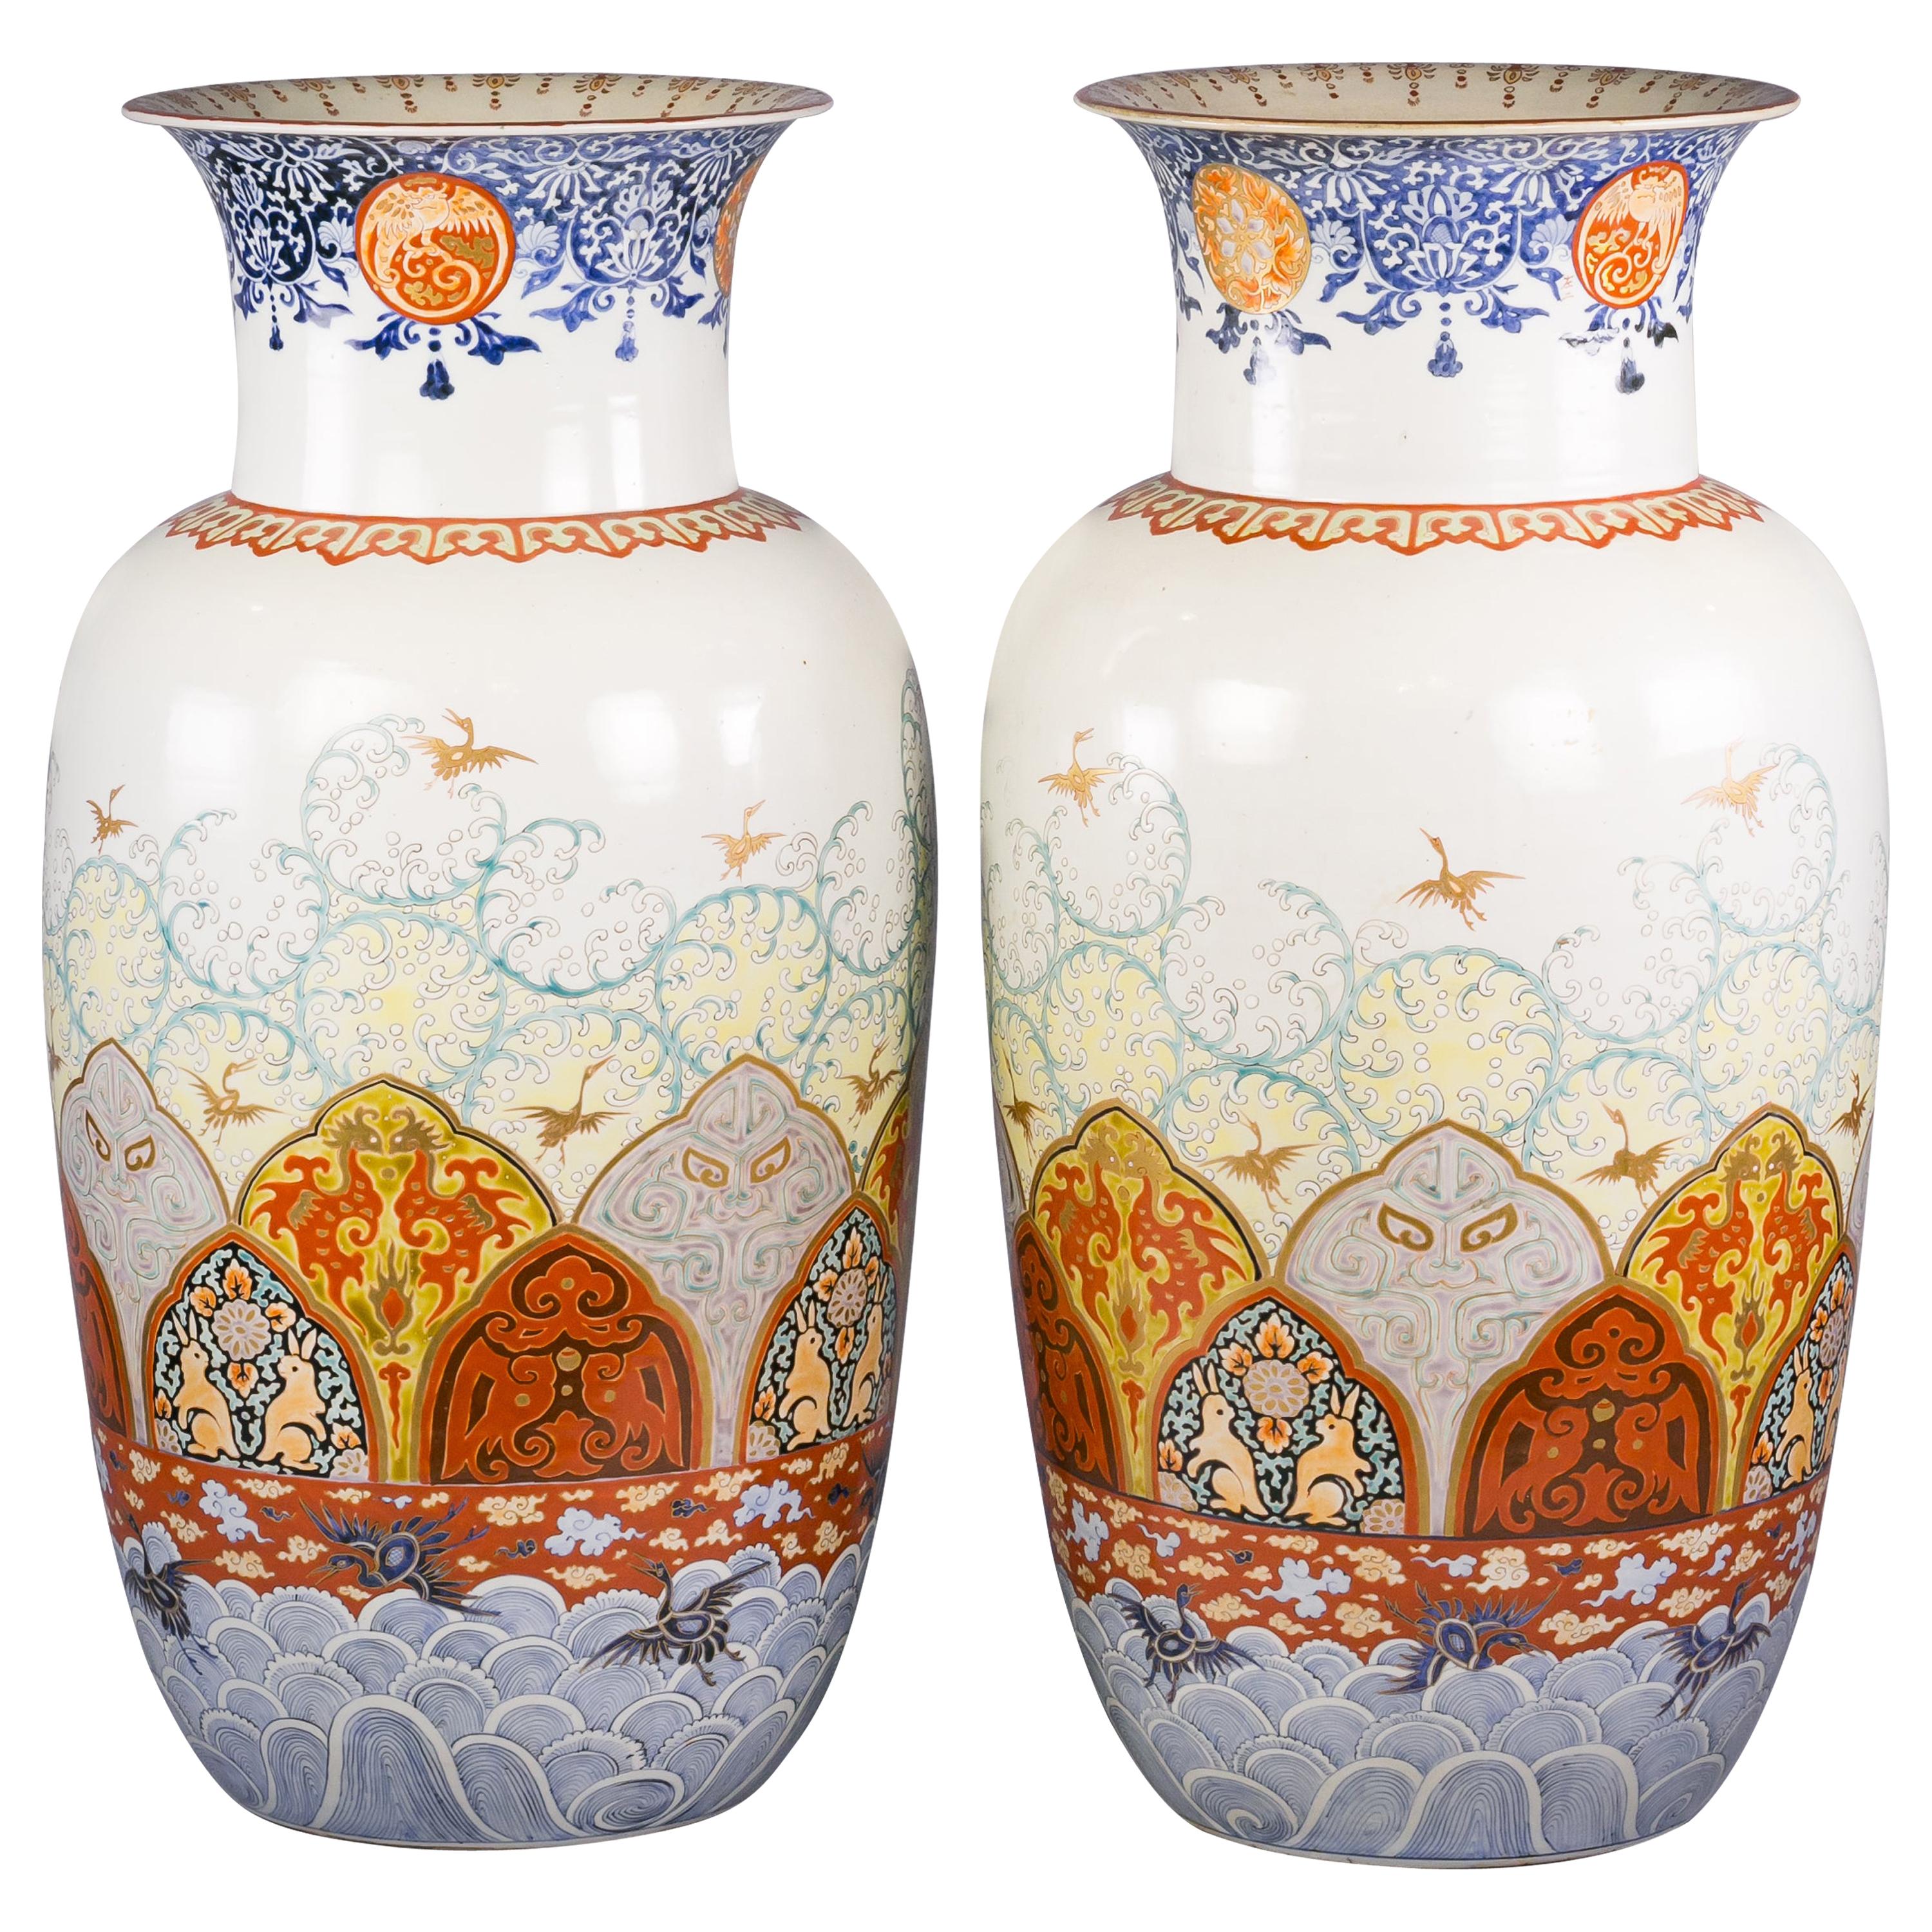 Large Pair of Japanese Imari Style Vases, circa 1880